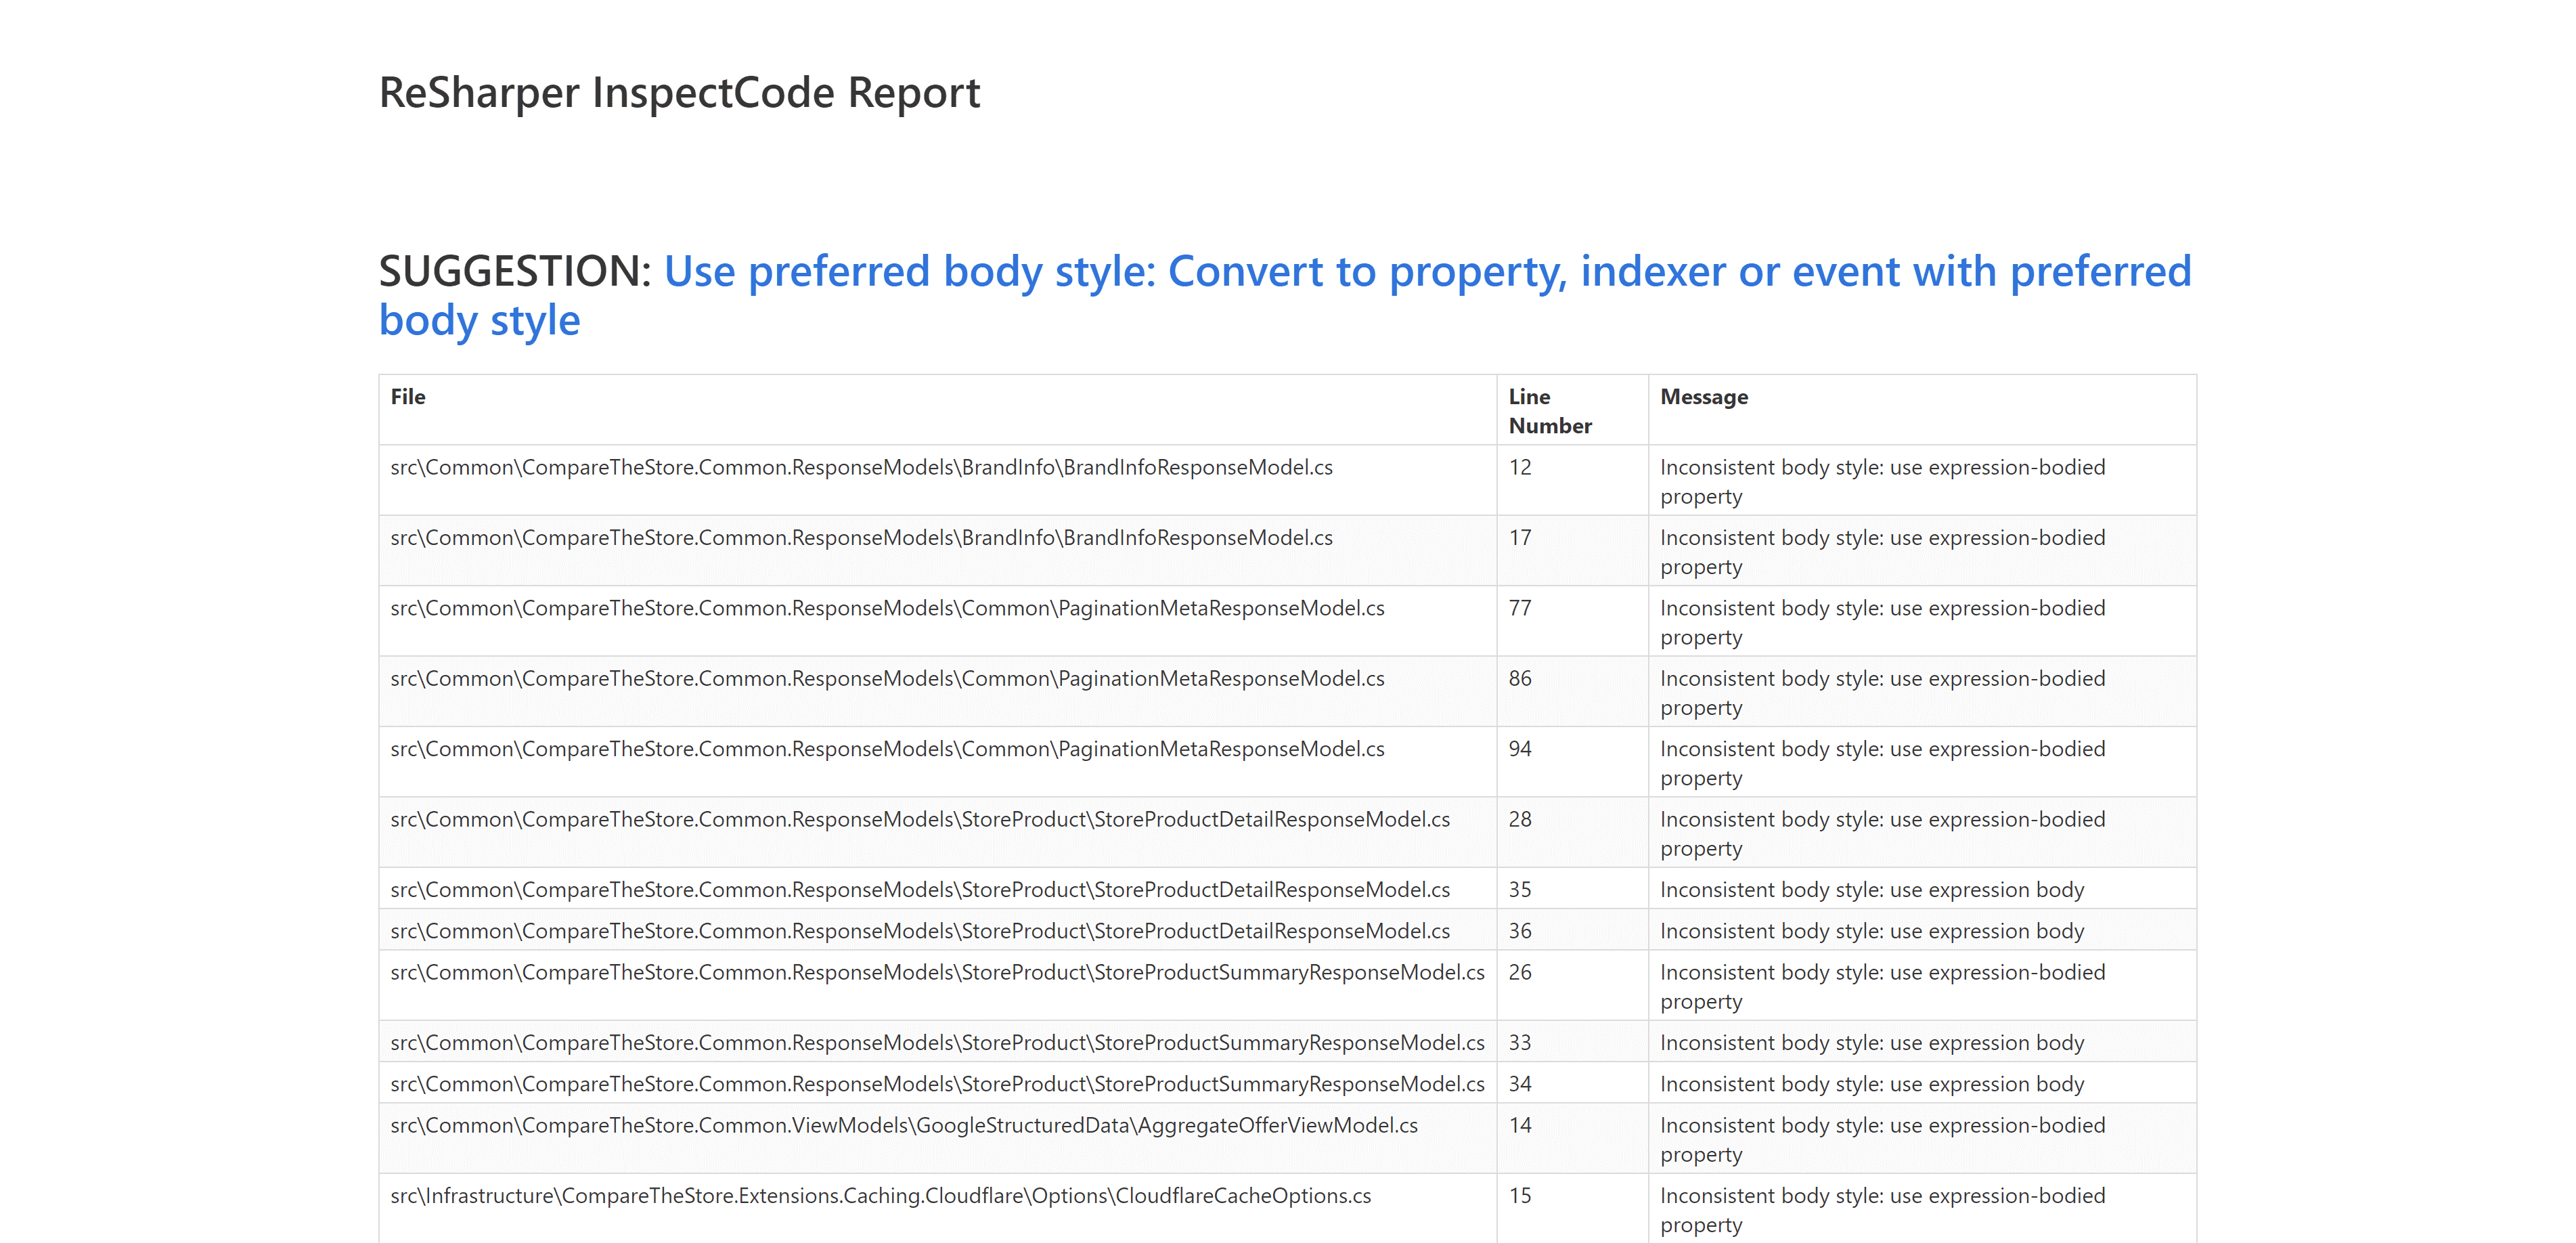 Adding ReSharper code analysis to your Azure DevOps CI build pipeline